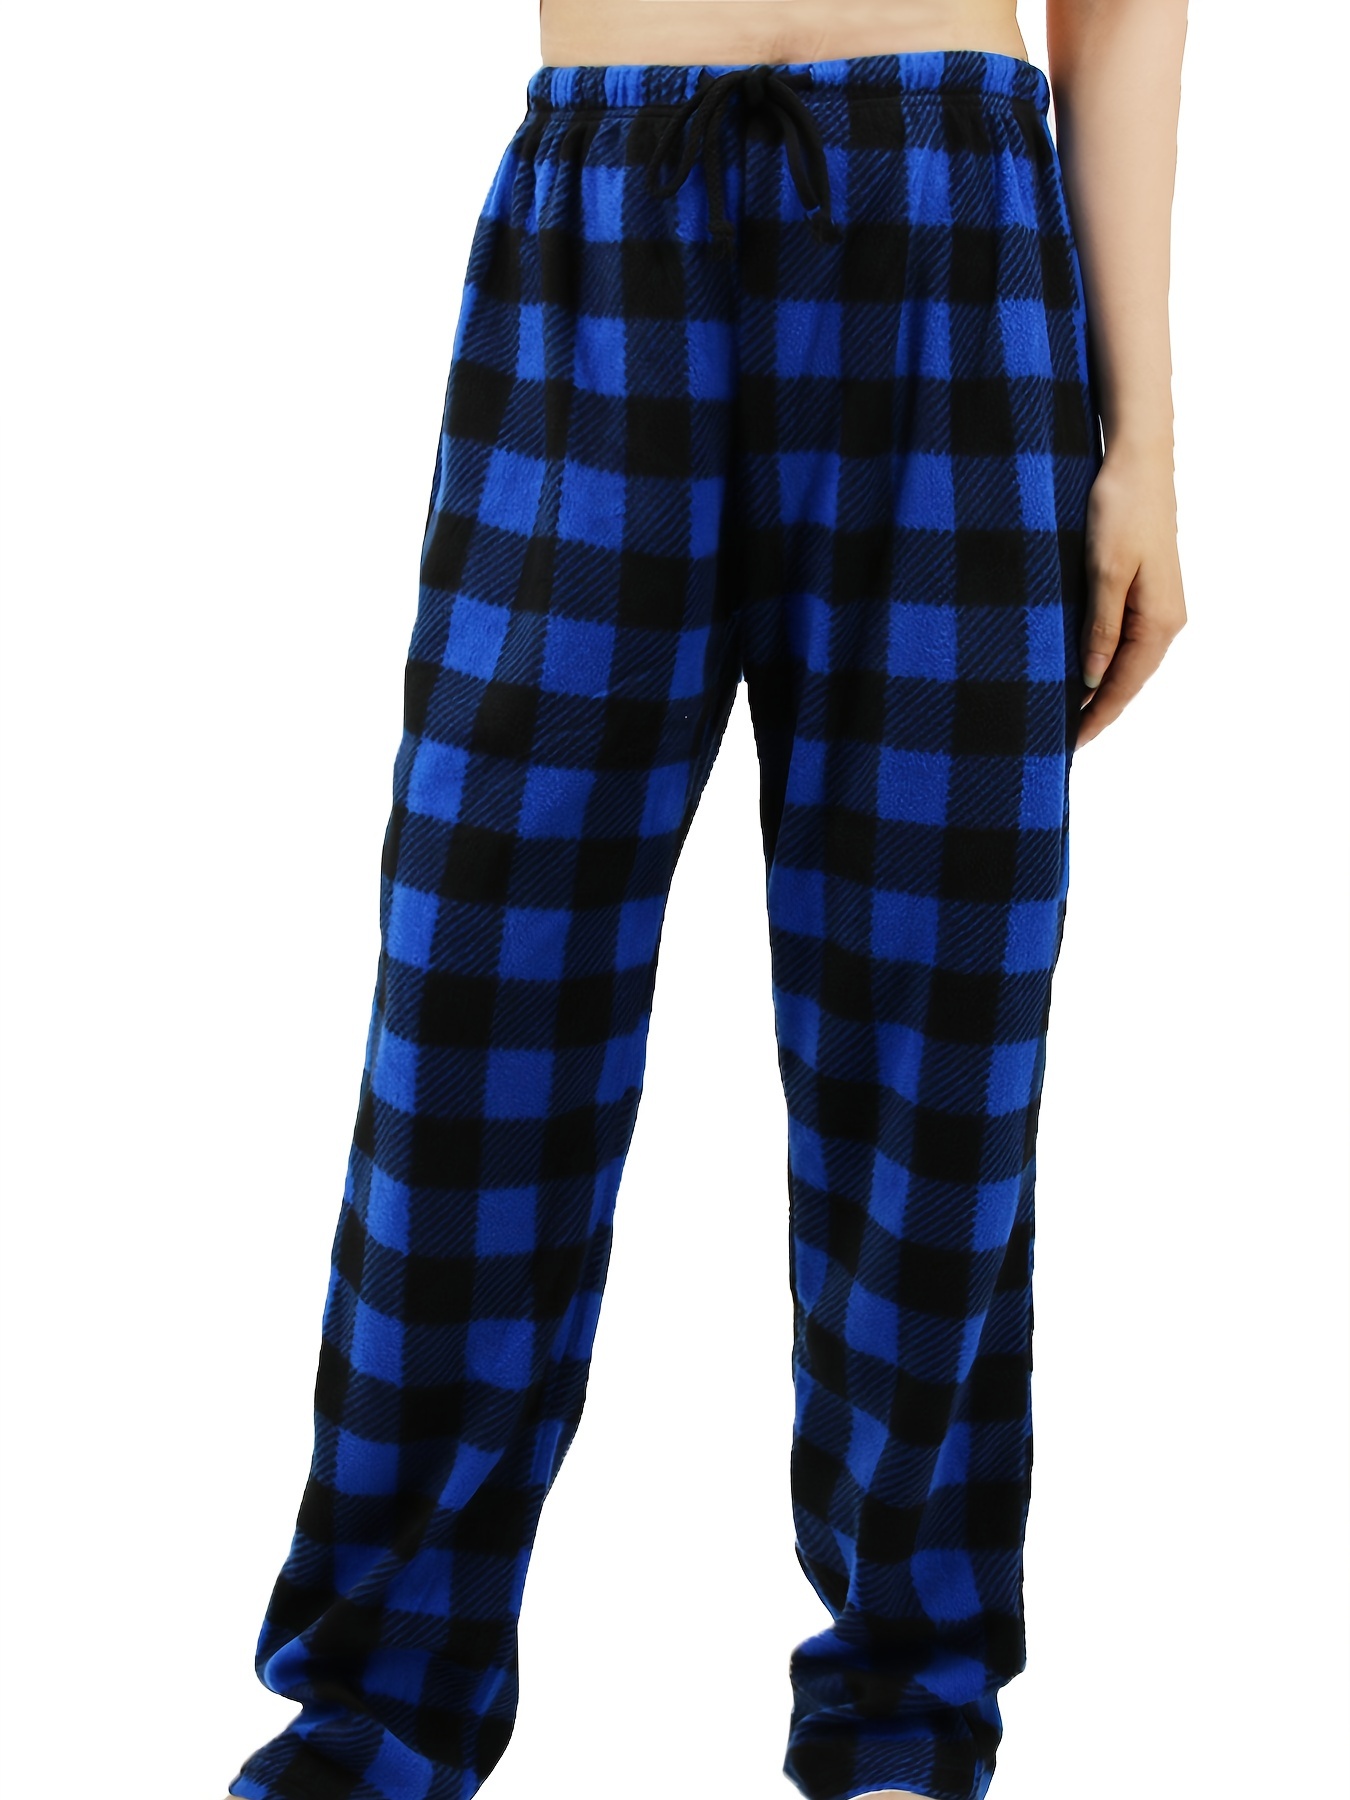 Soft Knit Pajama Shorts - Small blue plaid